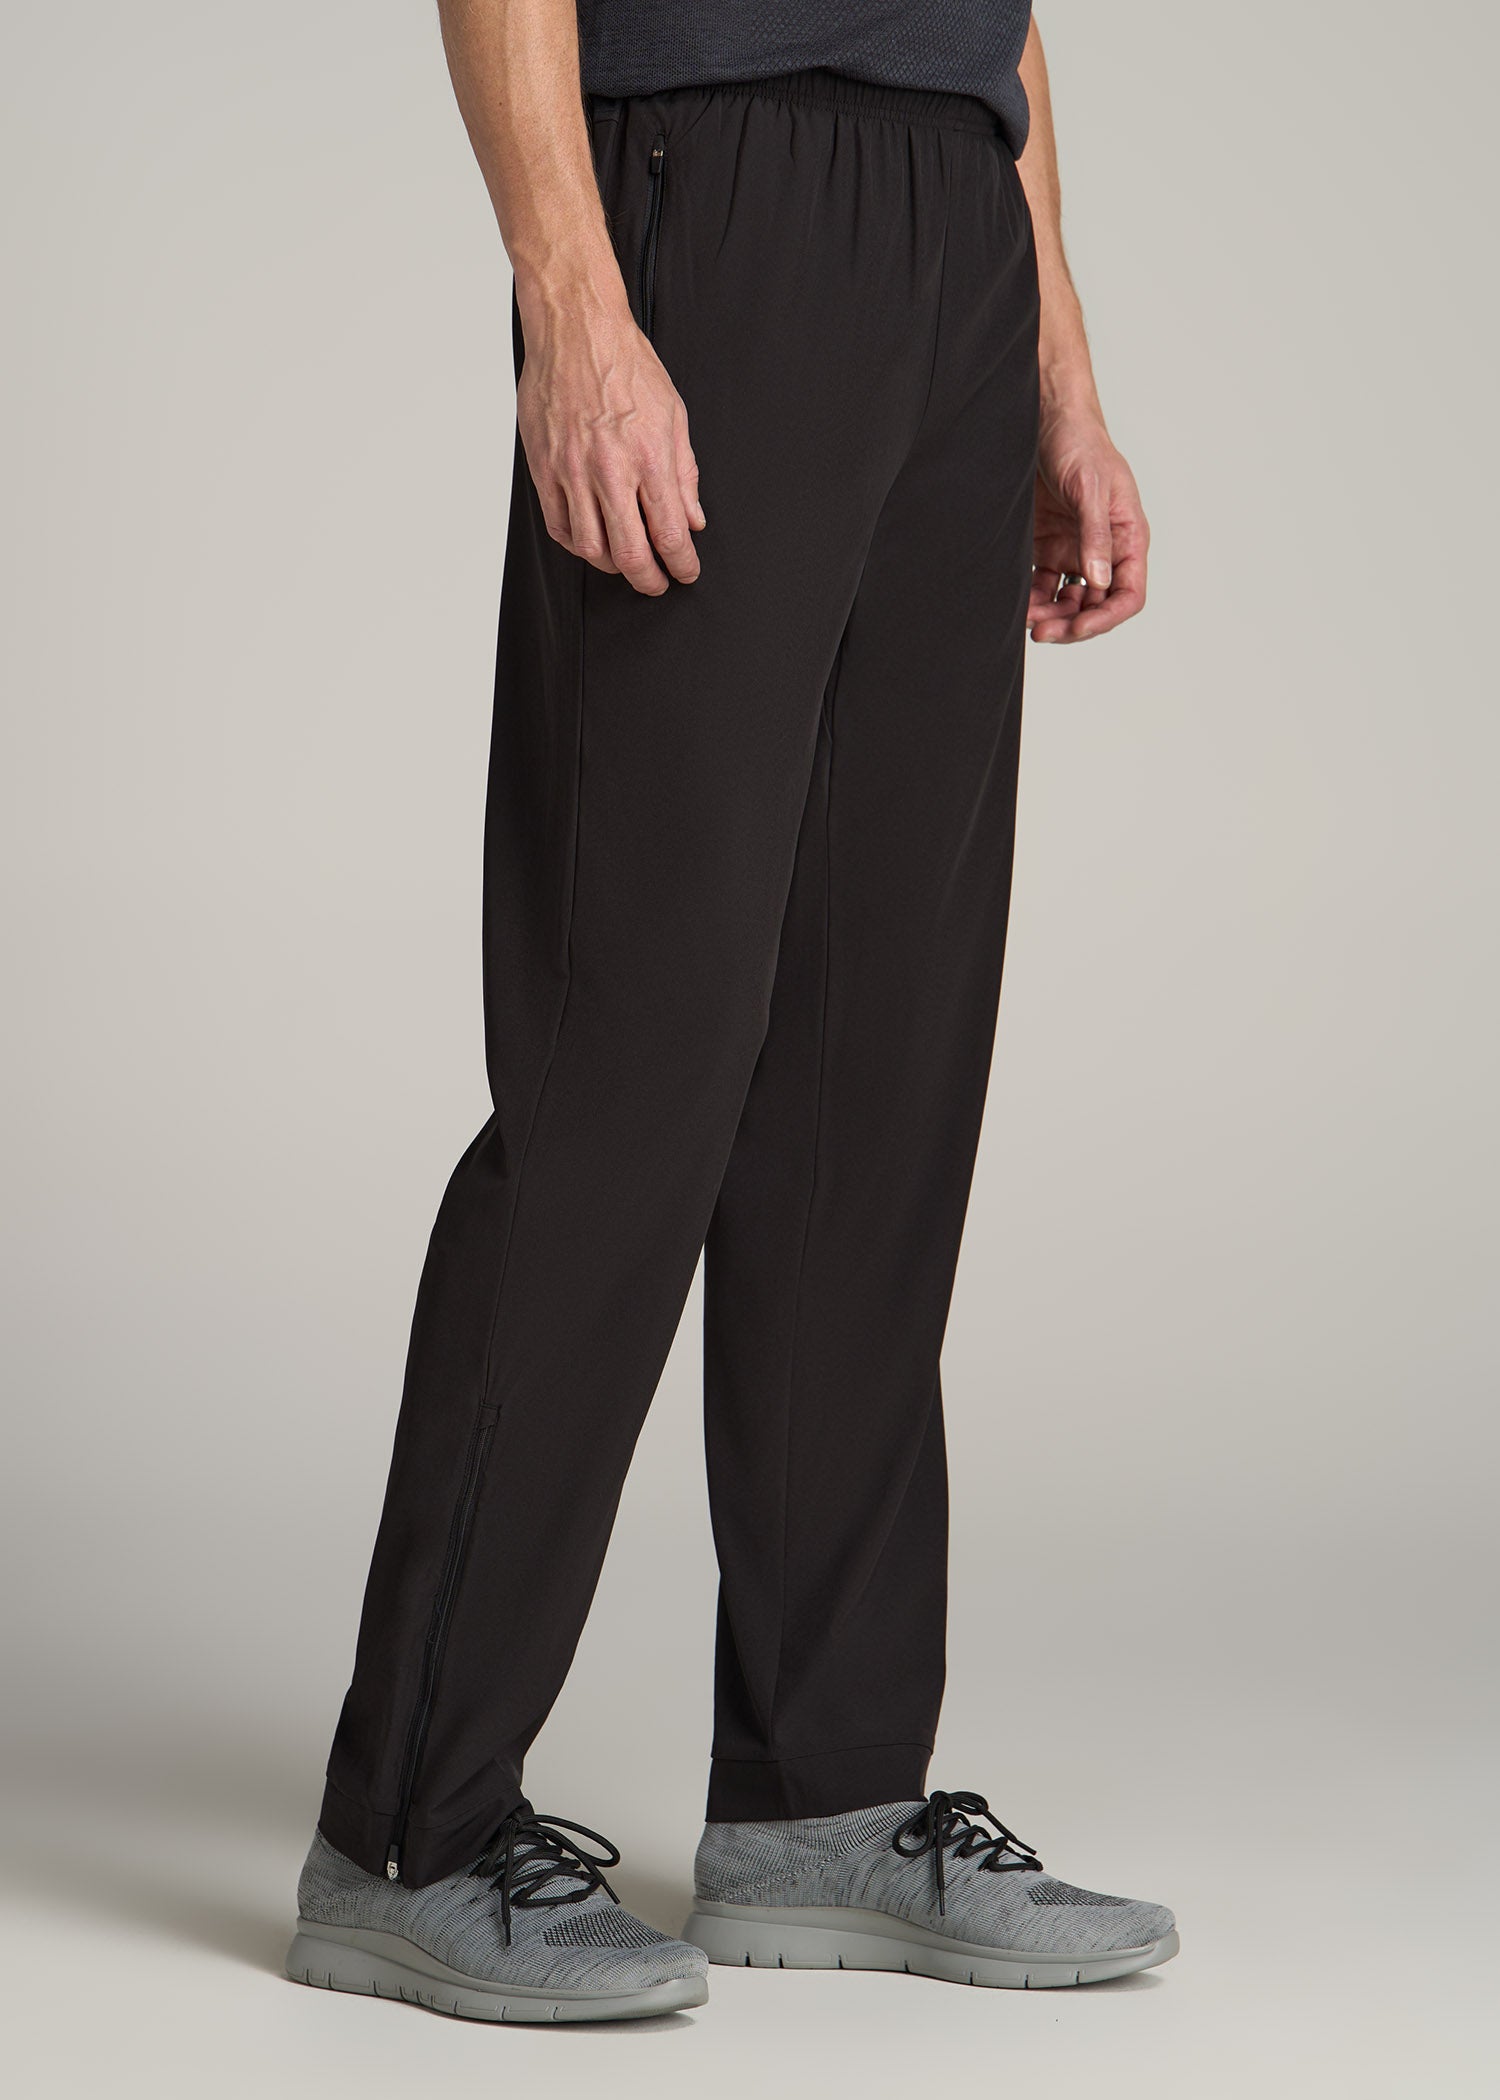 Pants Men's Black Ripped Jeans Men's Fashion Casual Straight Slim Trousers  Pencil Pants Black 40 : Amazon.ca: Clothing, Shoes & Accessories